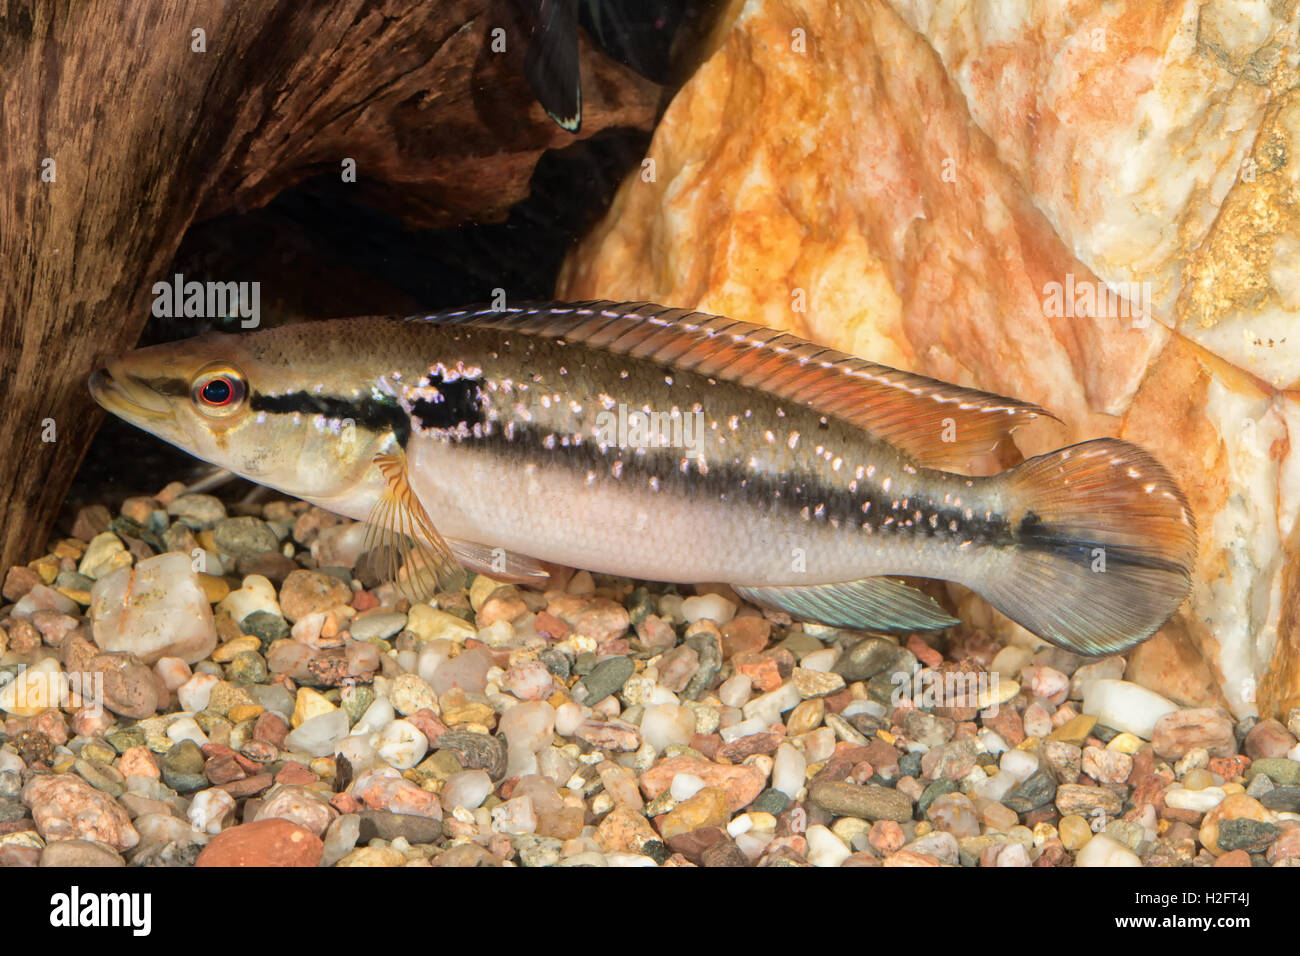 Portrait of freshwater cichlid fish (Crenicichla saxatilis) in aquarium Stock Photo